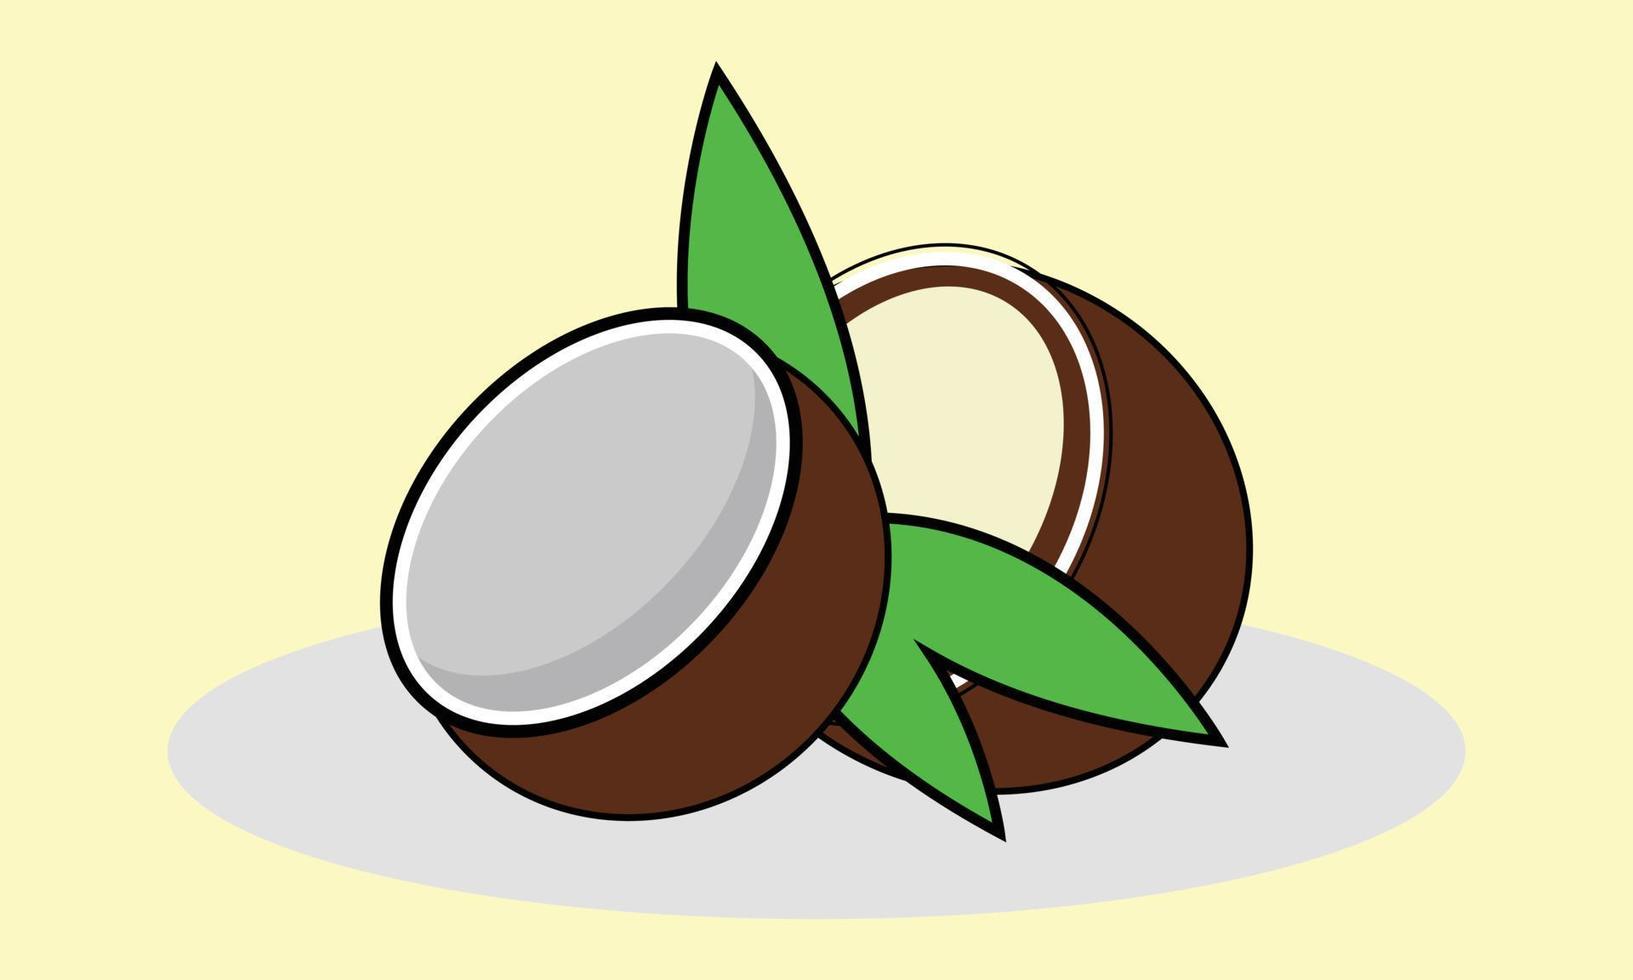 Kokosnussfruchtikone und Vektorillustrationen, die grüne Kokosnussfruchtikone kreative Kinder und grüne Kokosnussfruchtikonenthemavektorillustration. vektor